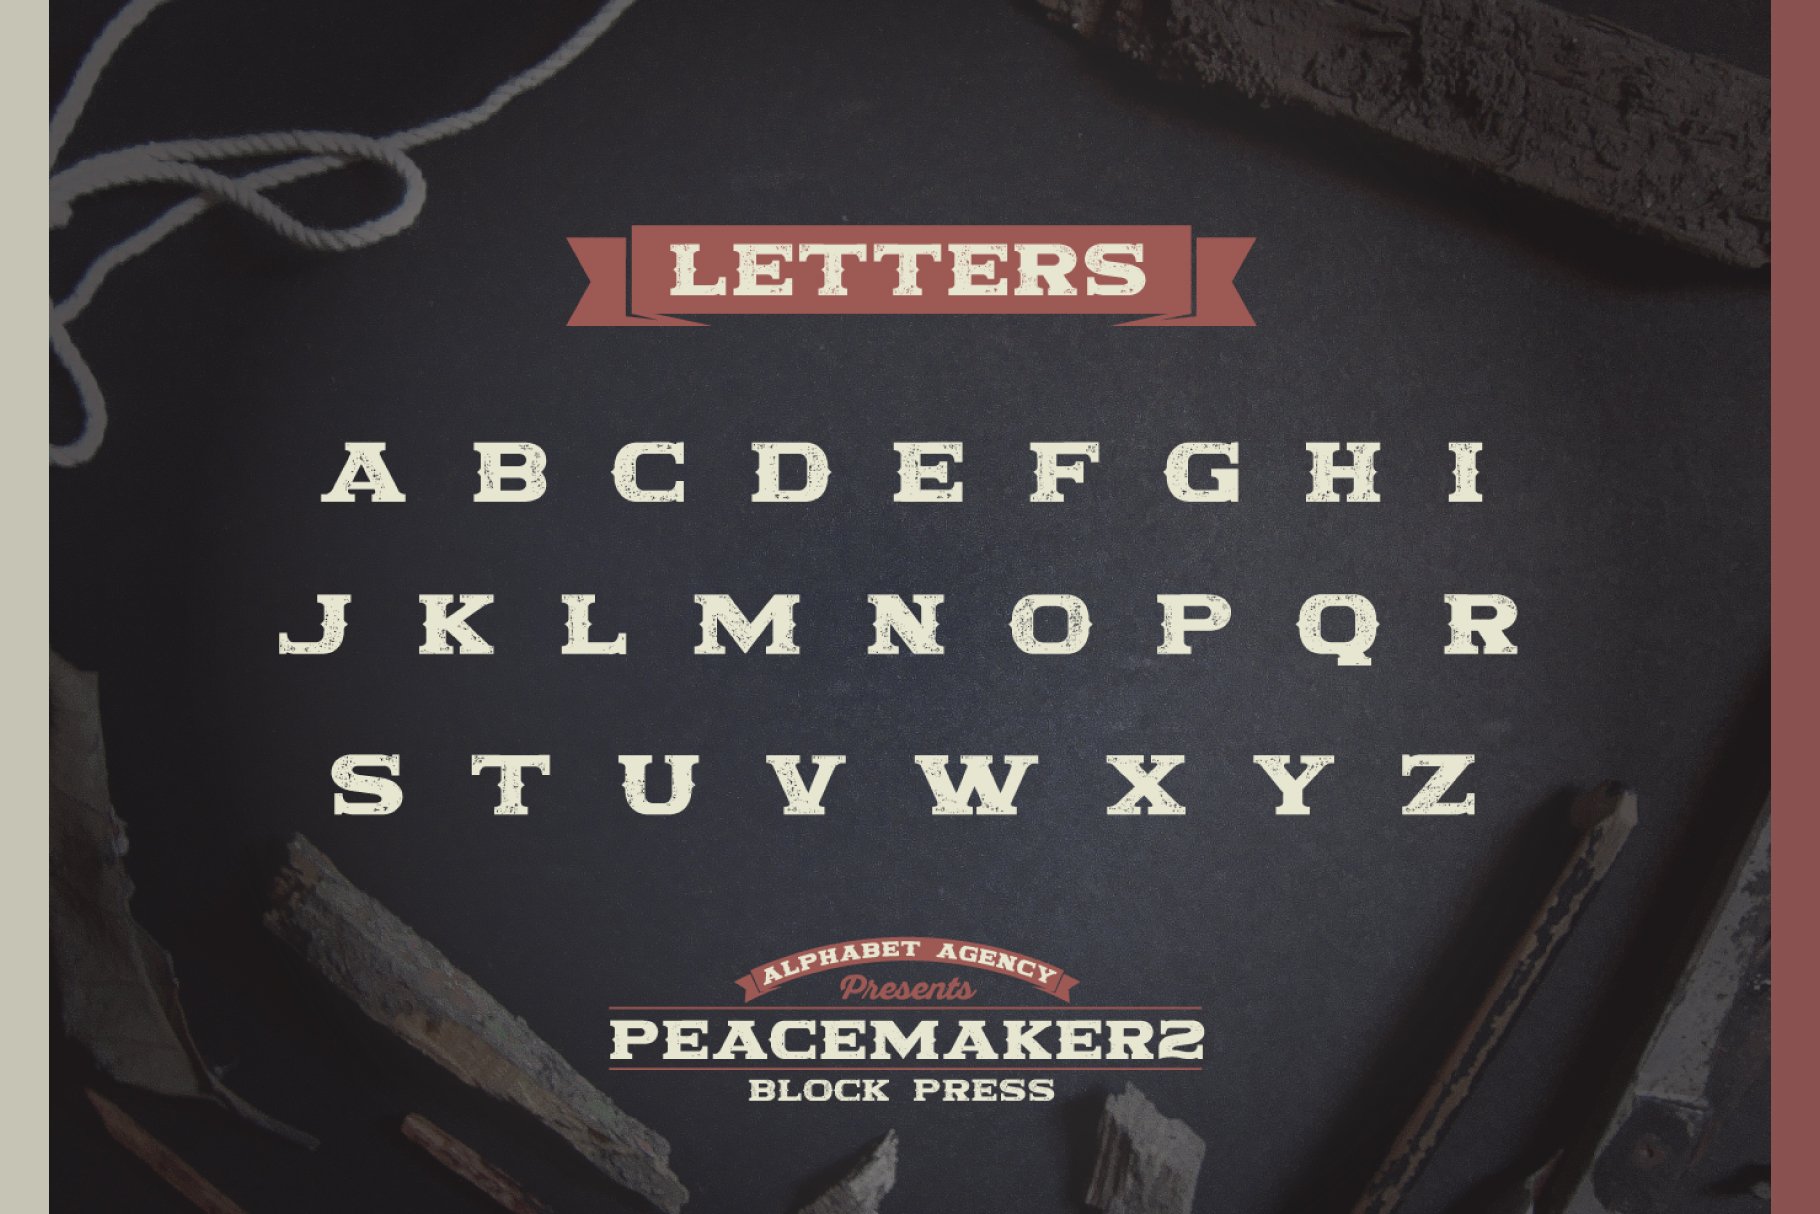 peacemaker2 blockpress letter 1820x1214 185